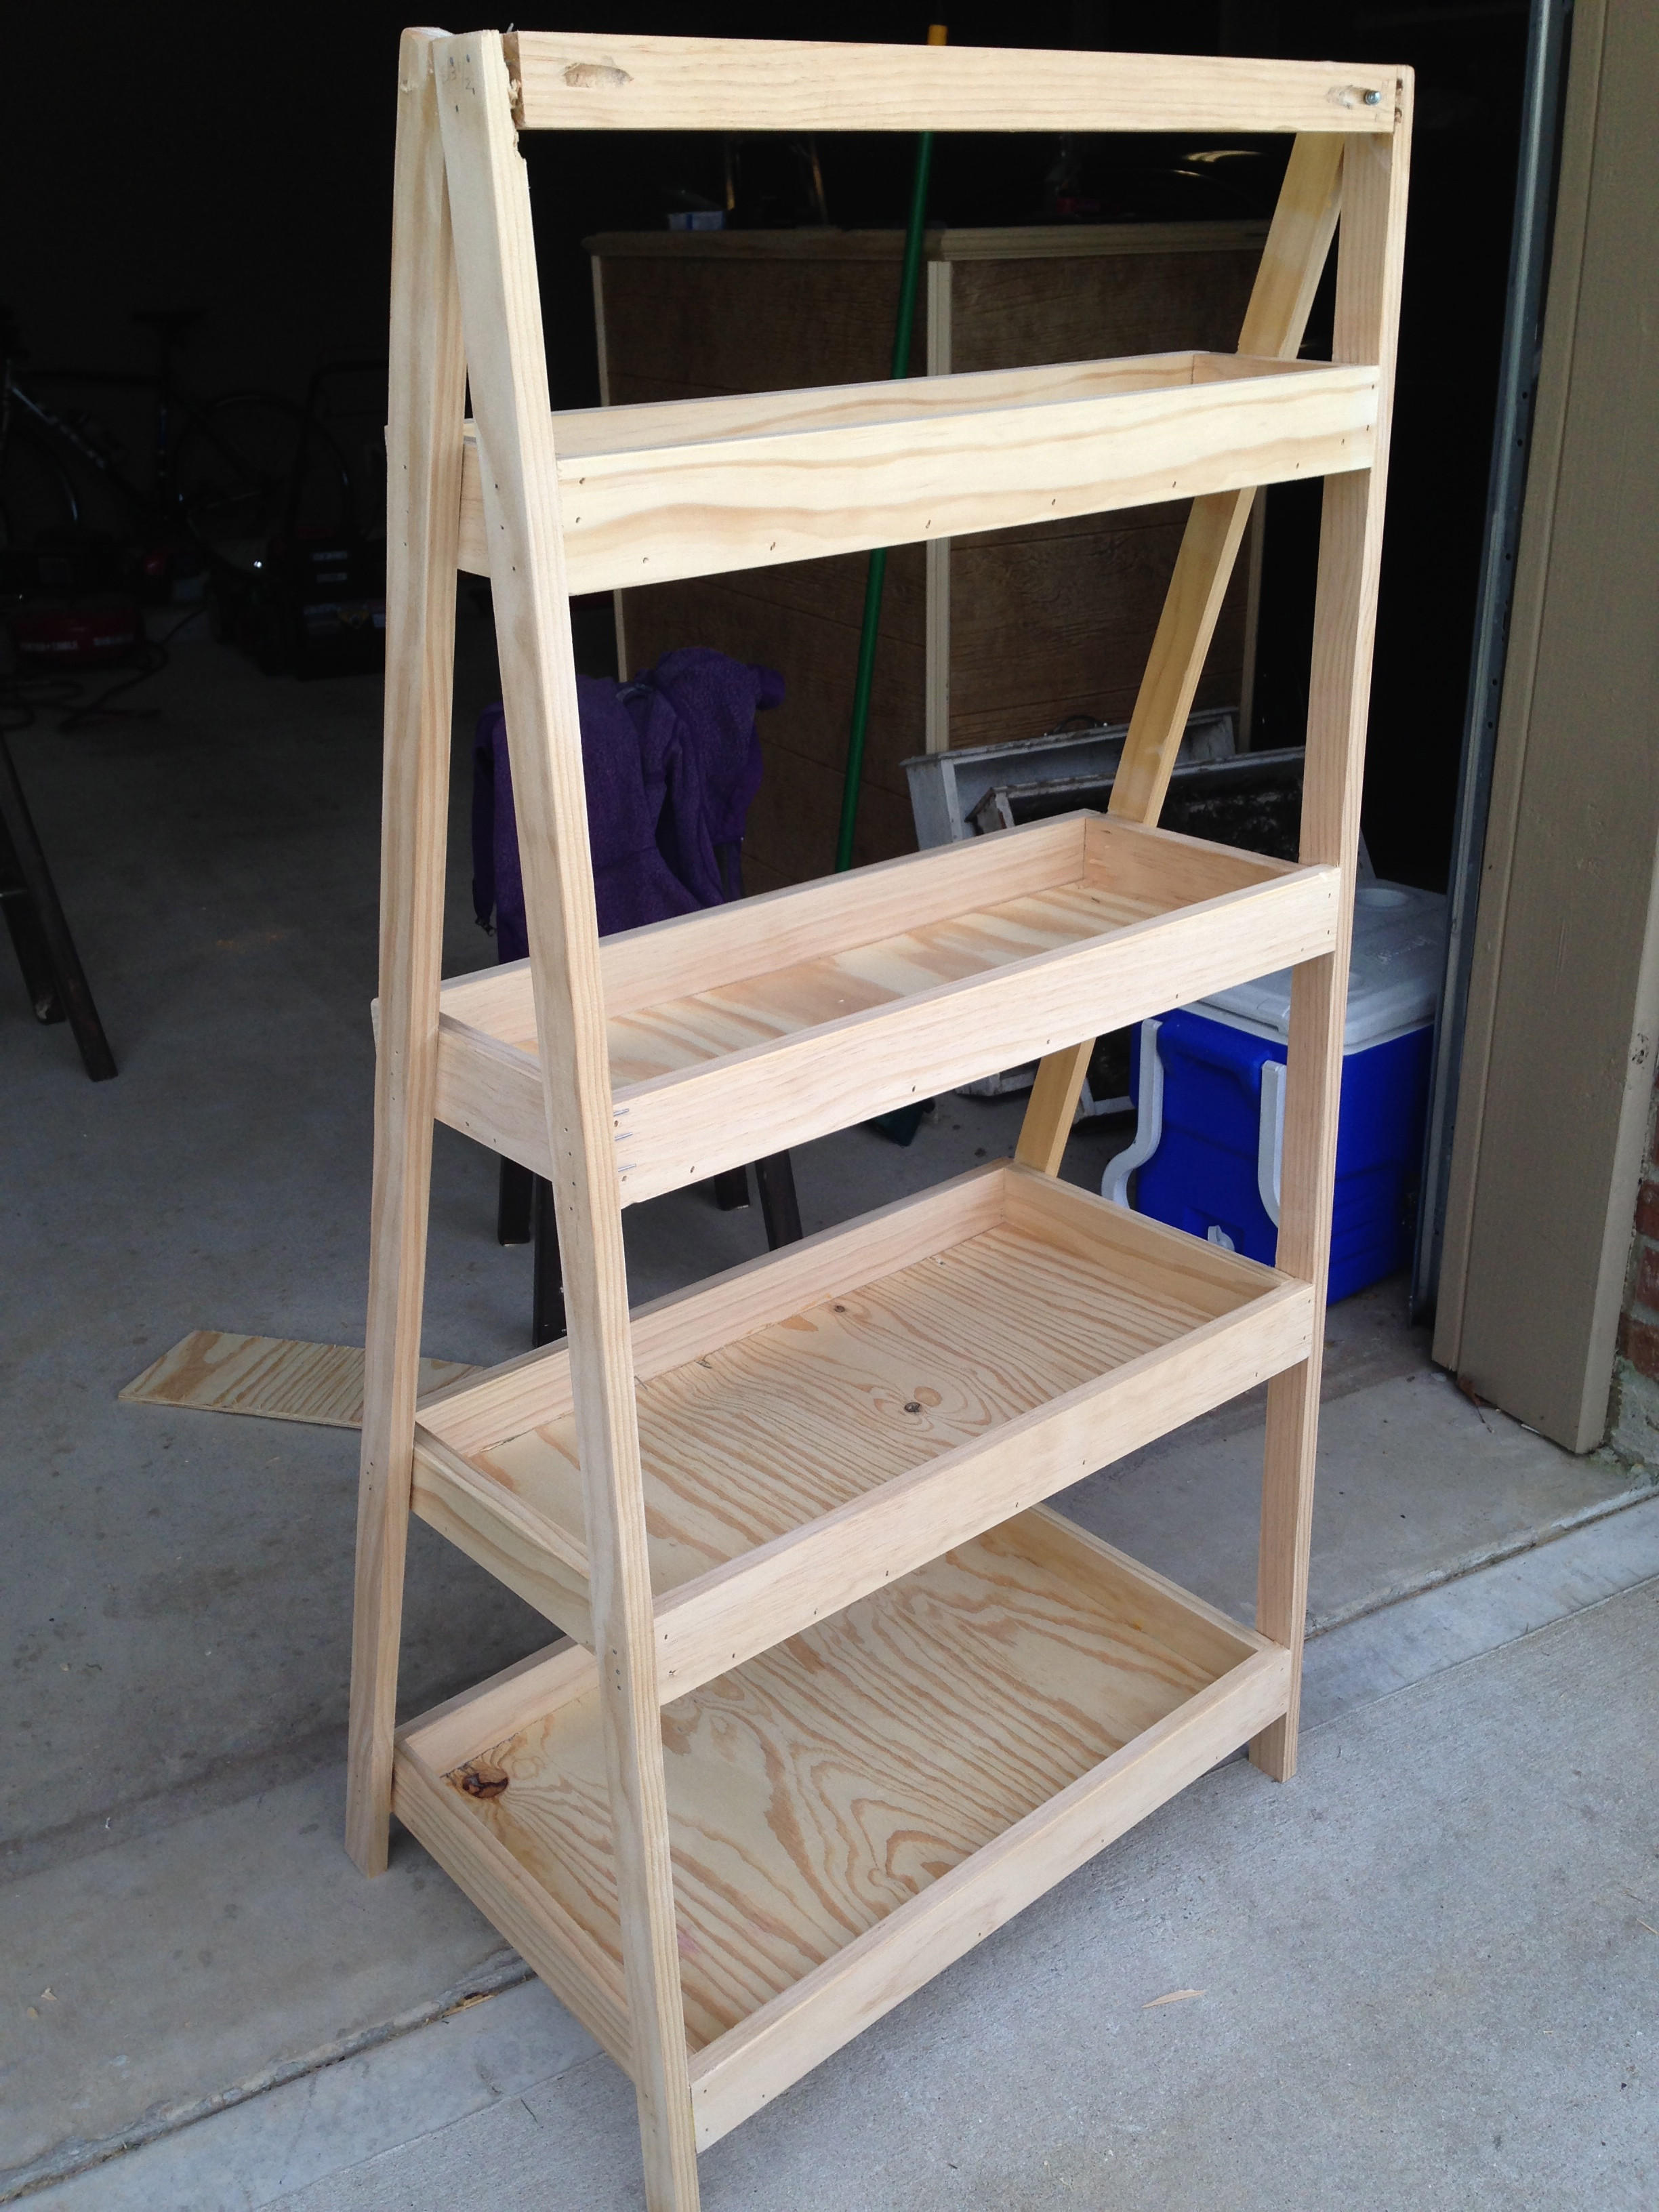 Best ideas about DIY Ladder Shelf Plans
. Save or Pin DIY Painter’s Ladder Shelf Now.